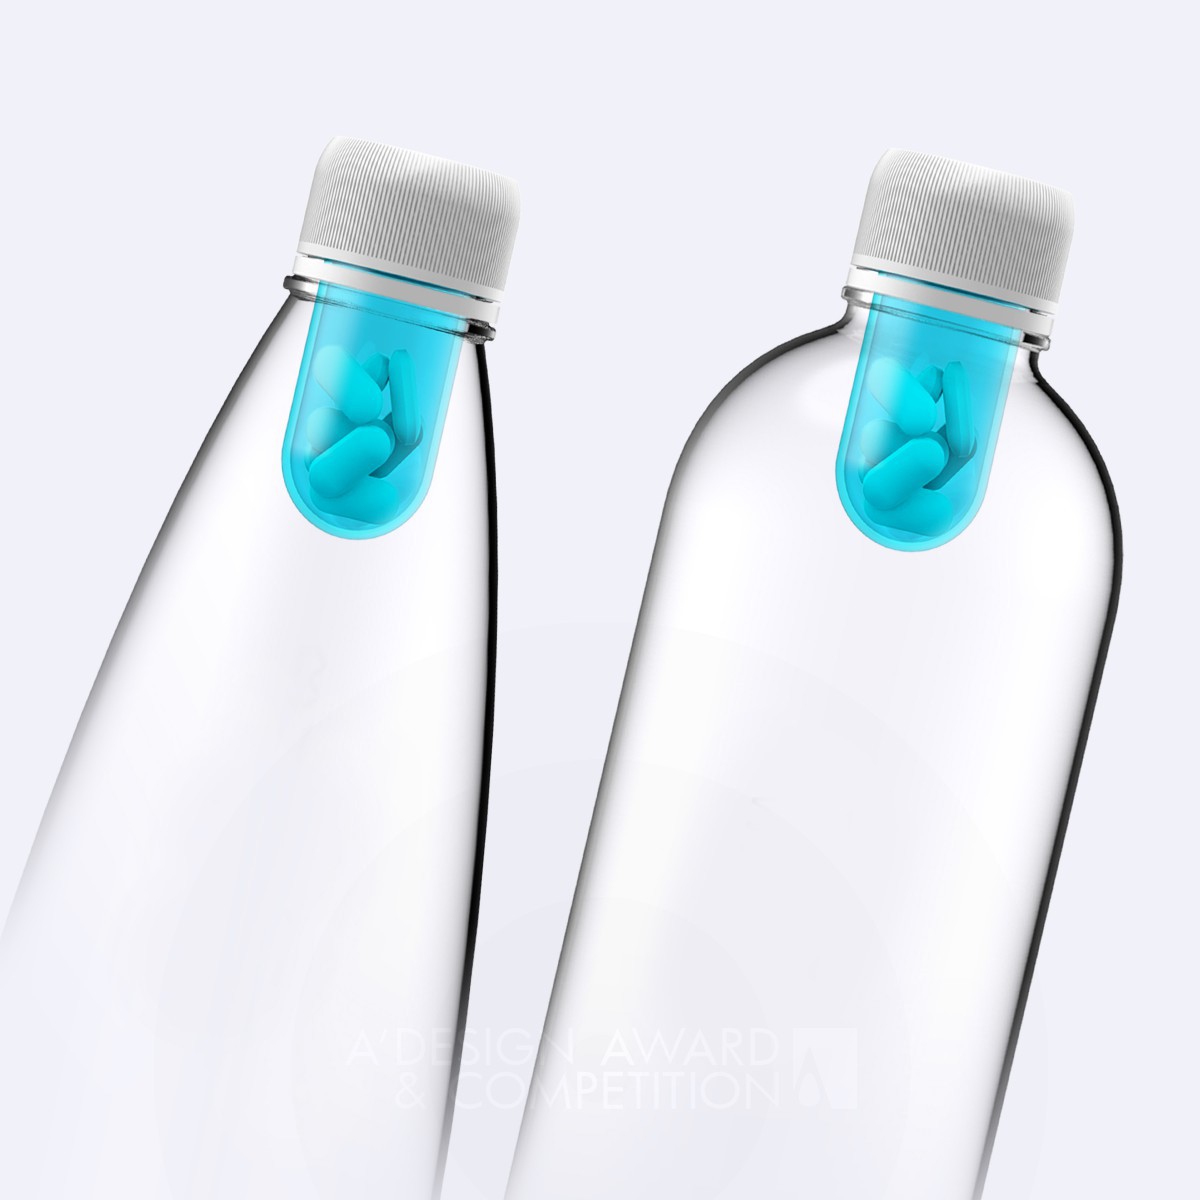 LW-01 Medical bottle cap by SUWU Design Studio Iron Idea and Conceptual Design Award Winner 2016 